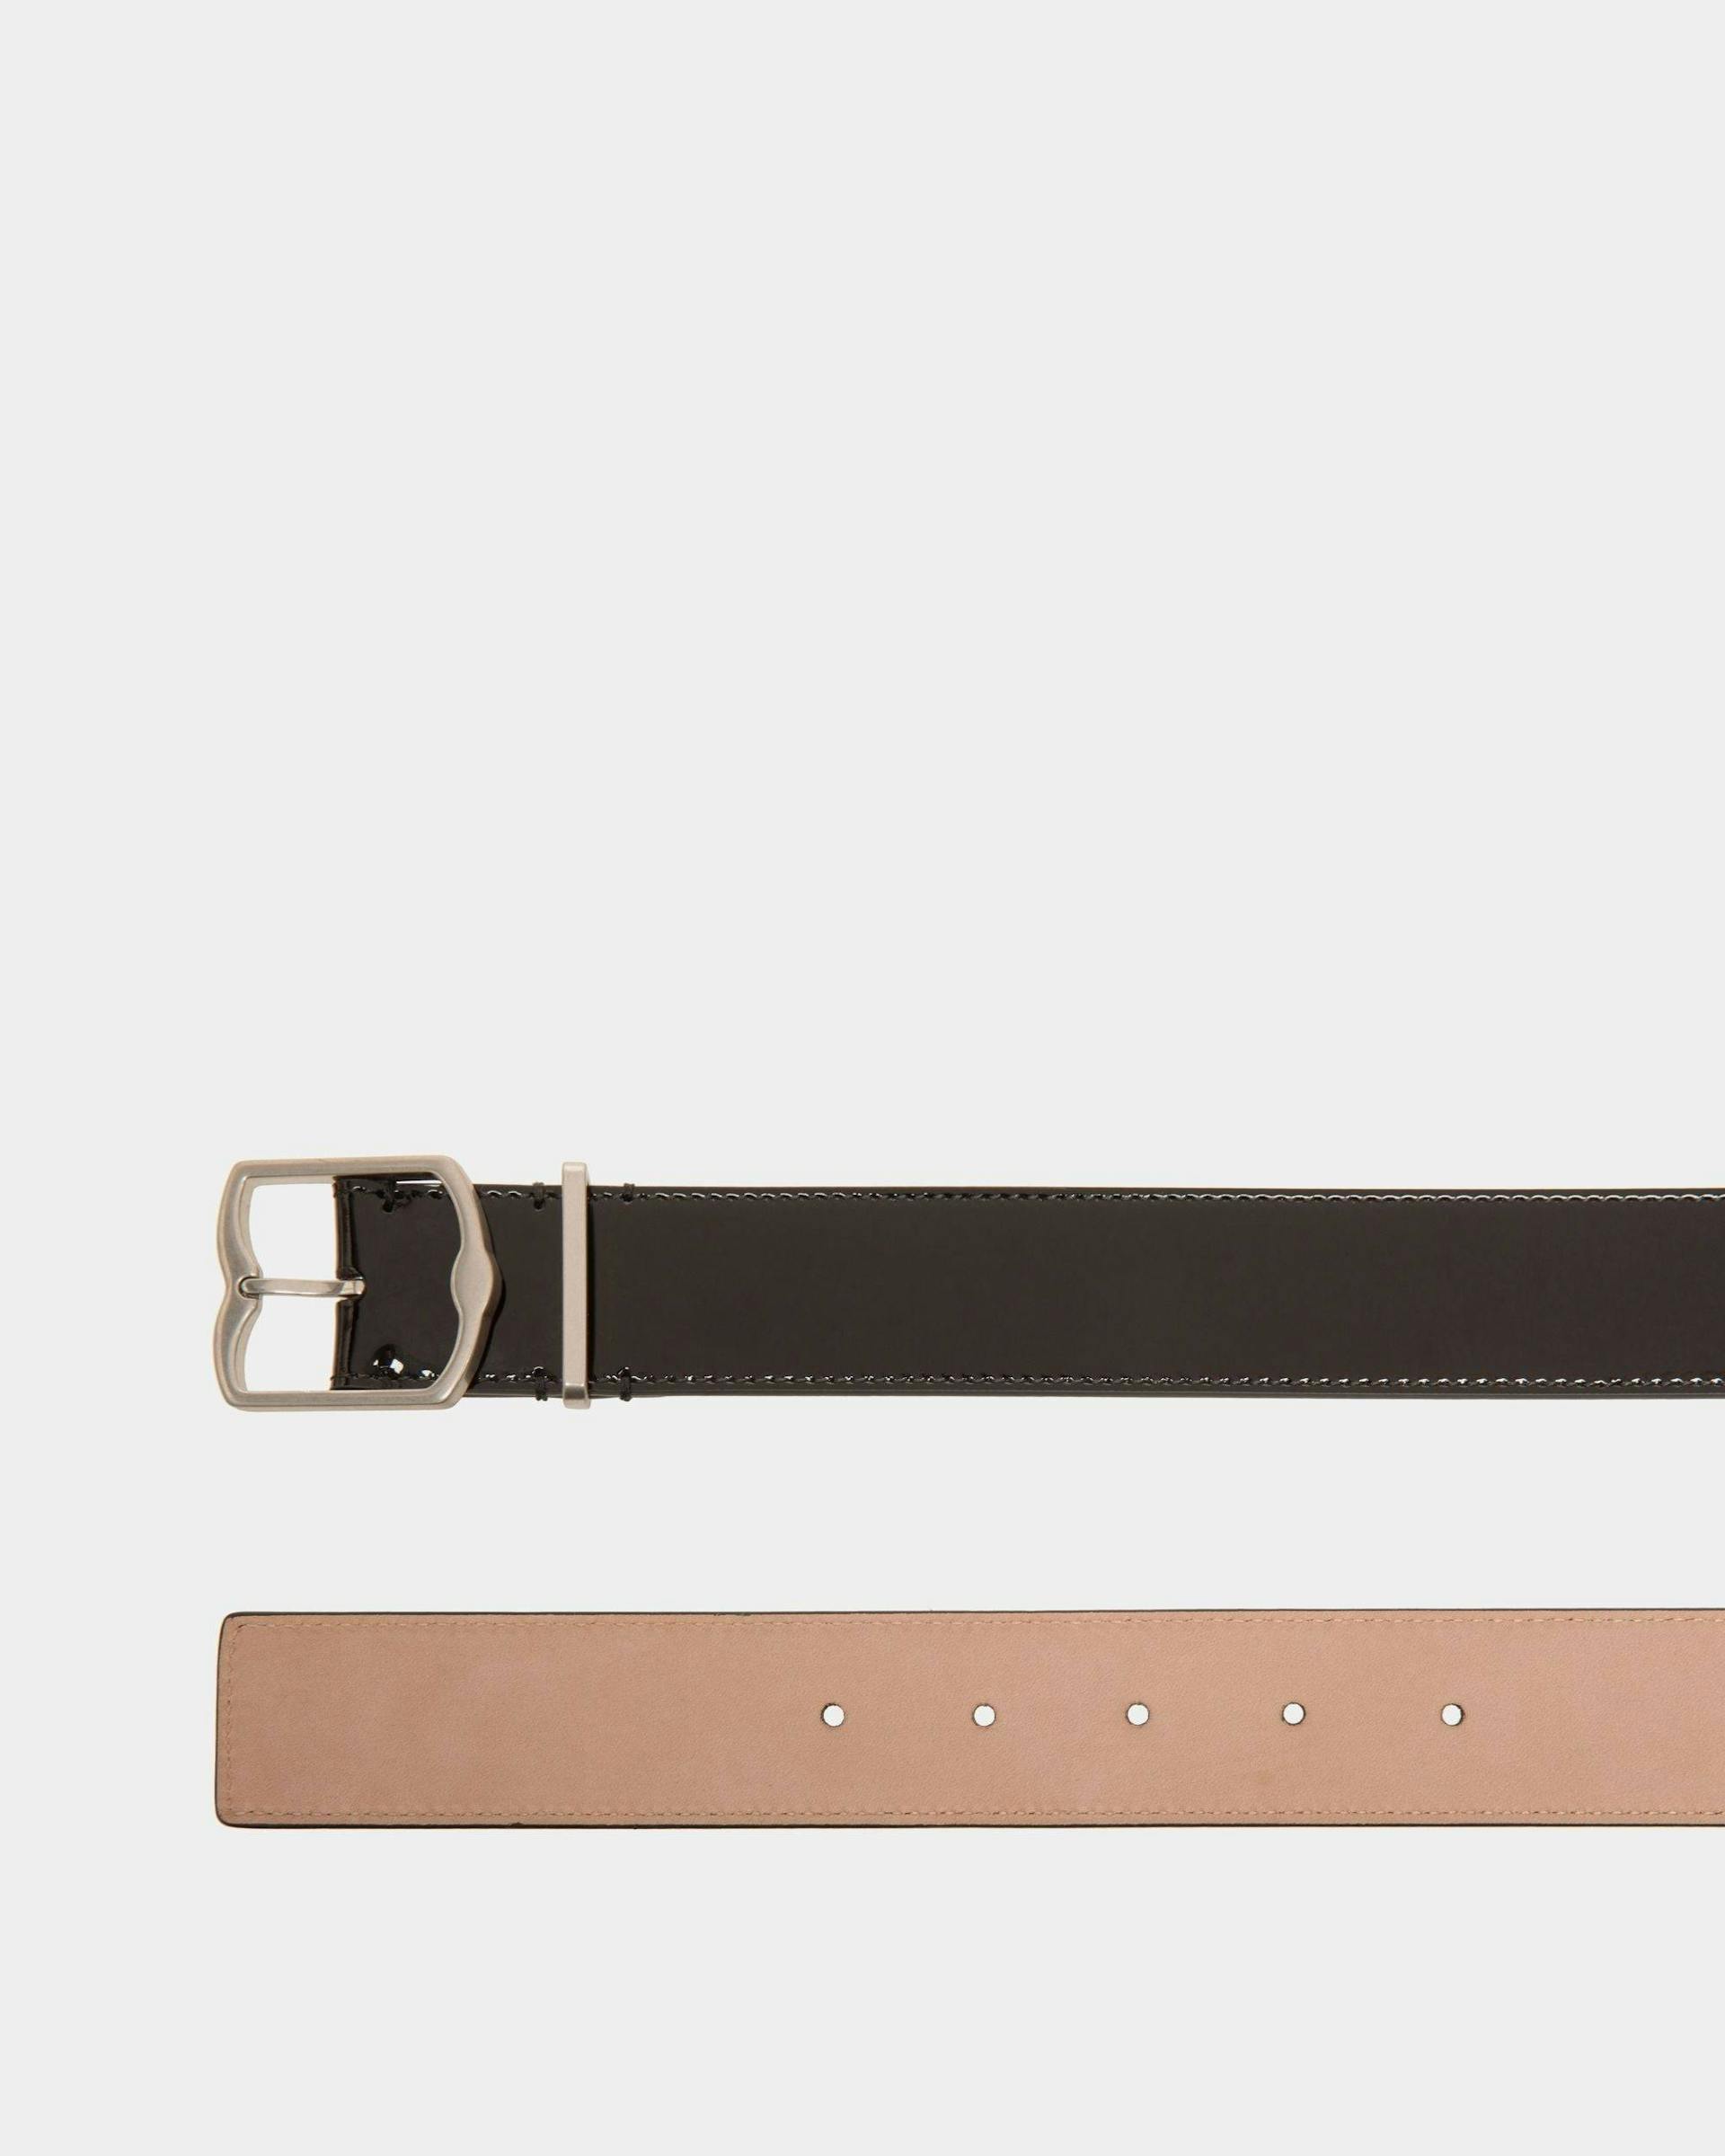 Men's Emblem 35mm Belt in Black Patent Leather | Bally | Still Life Detail